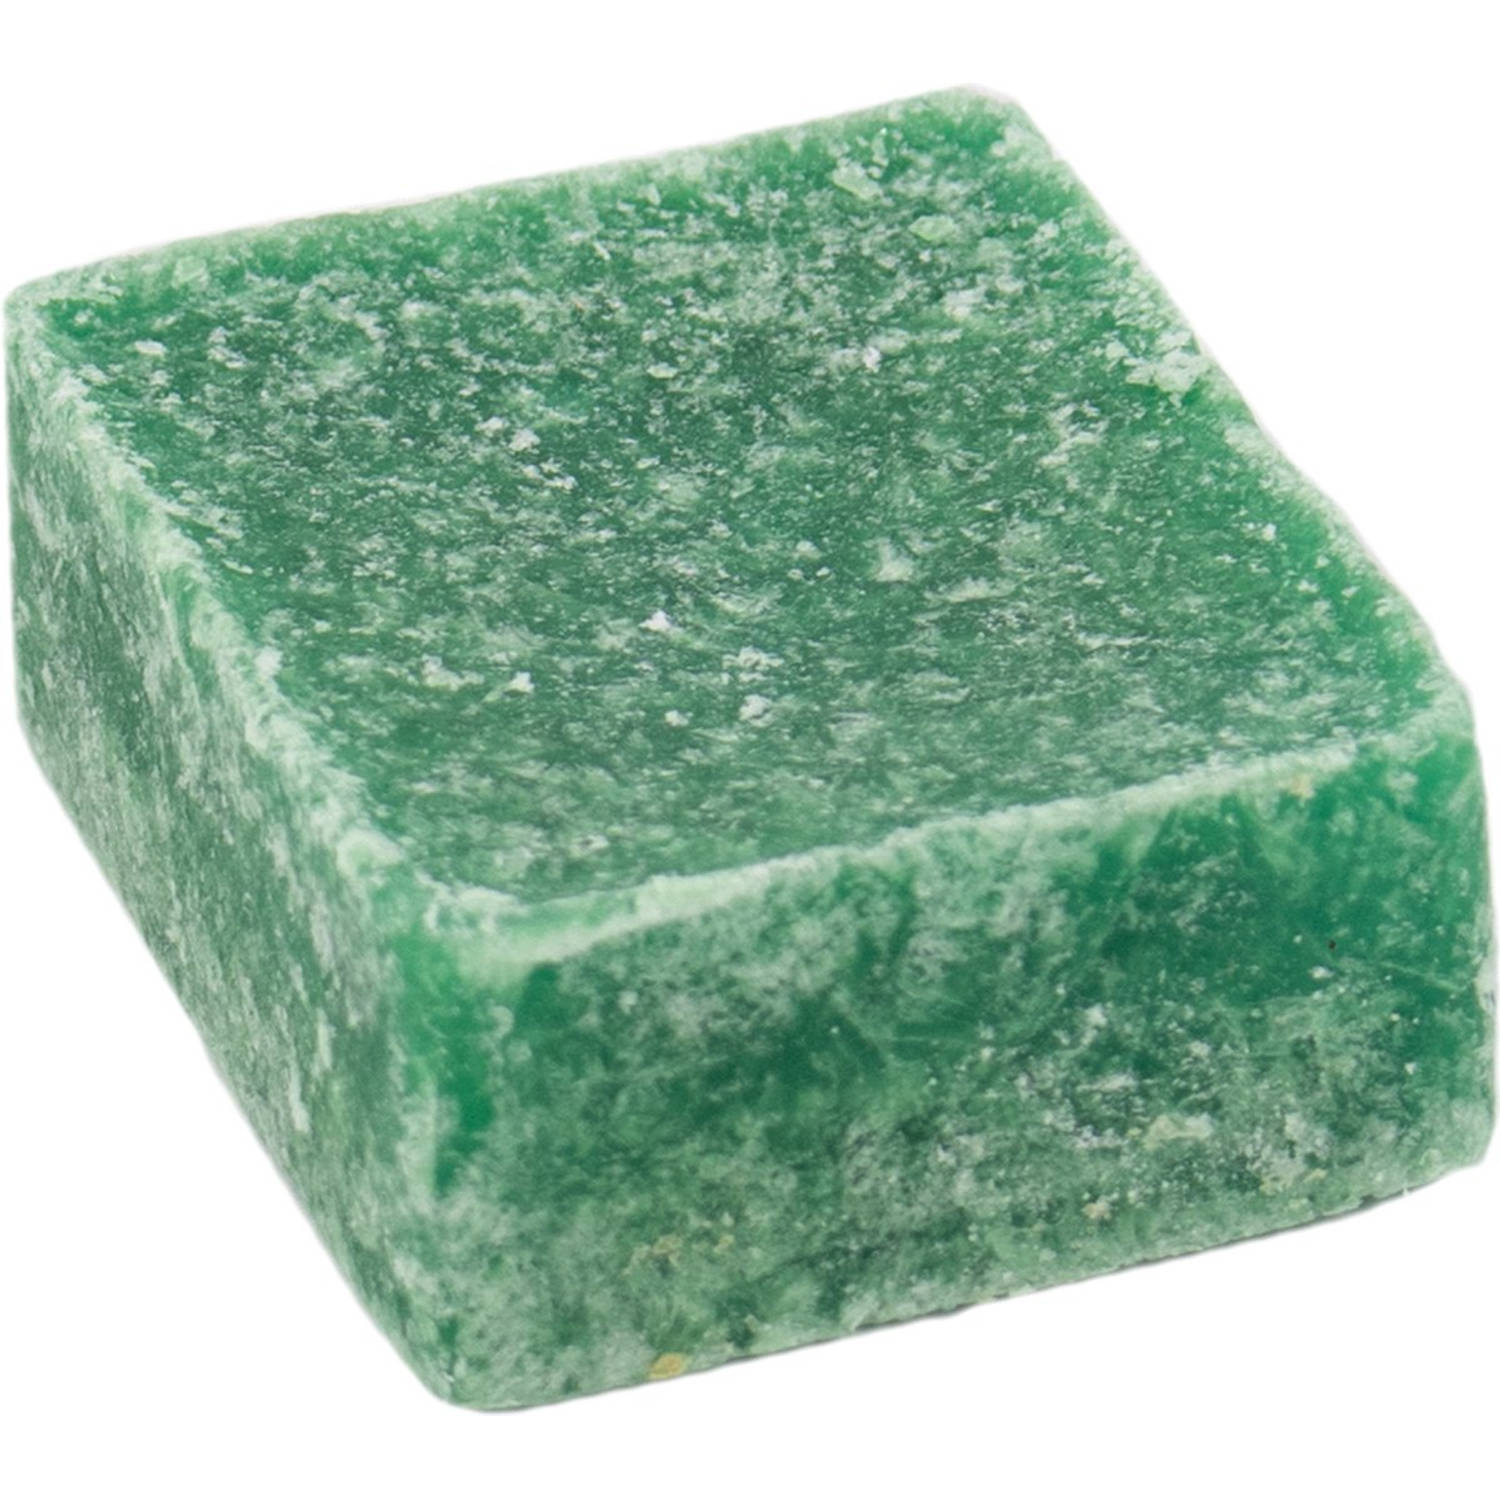 Kolony - Amberblokje 'Green Patchouli' (10 stuks)